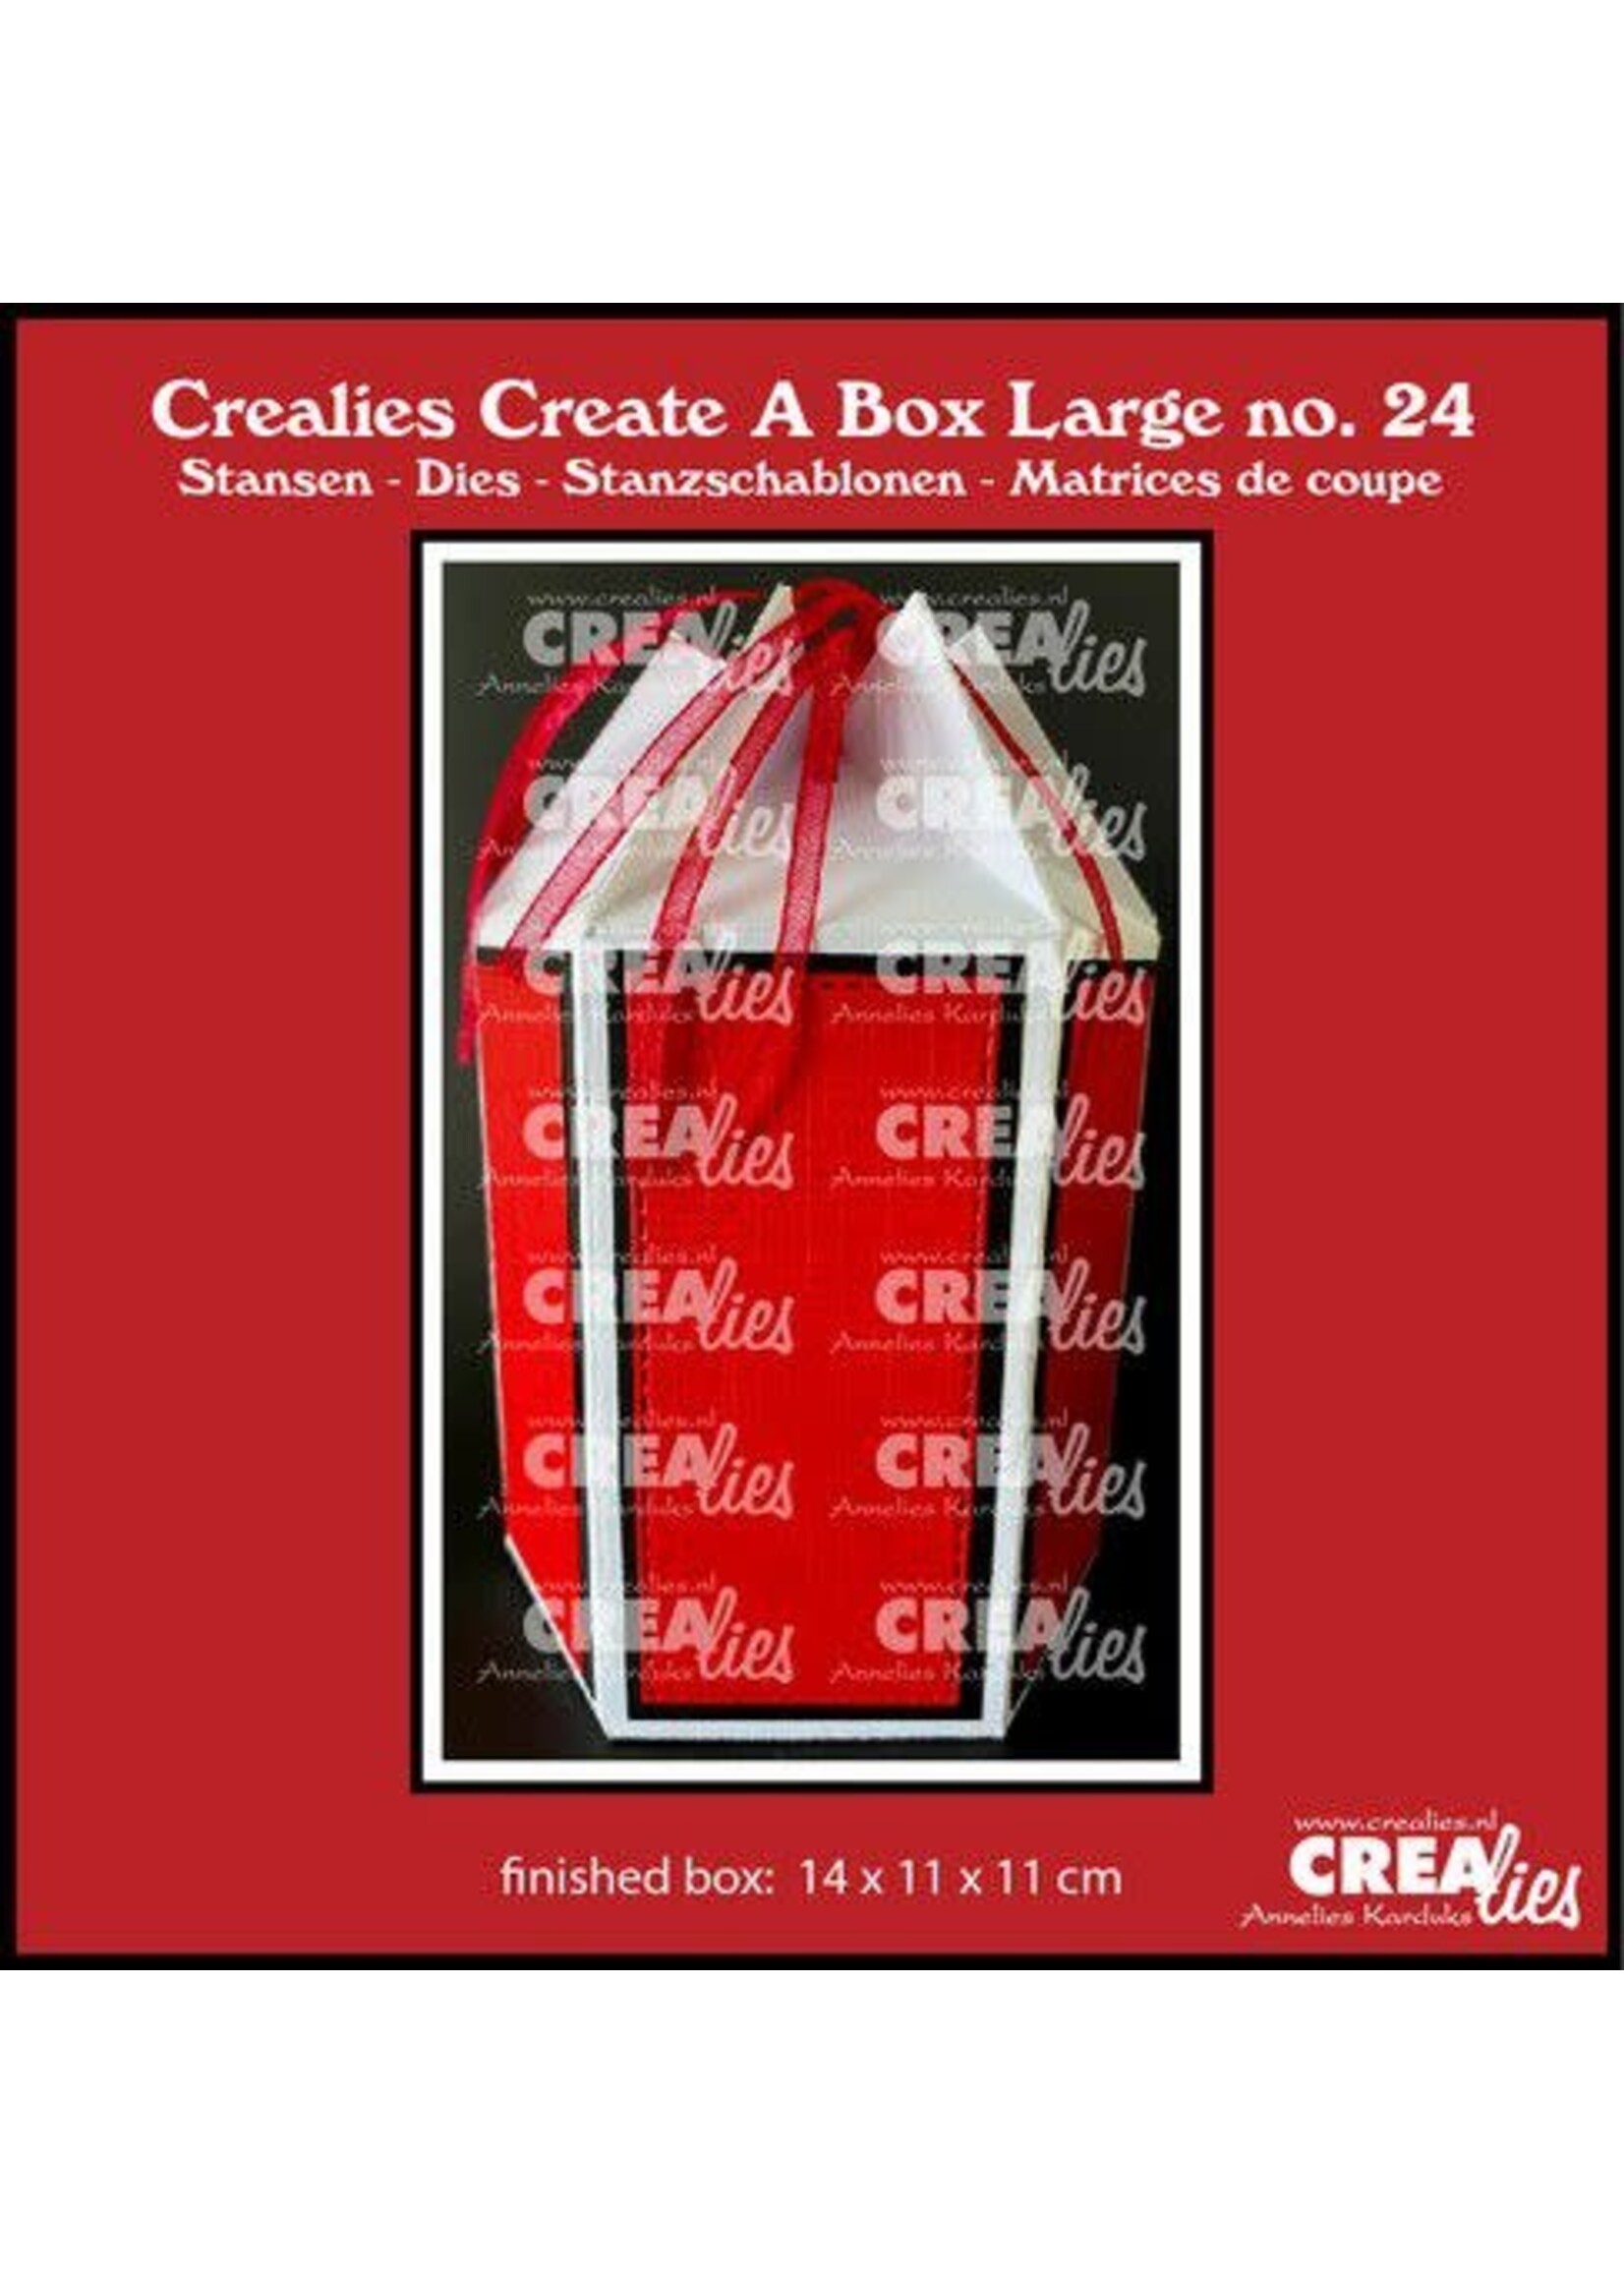 Crealies Crealies Create A Box Large Zeshoek doos CCABL24 finished:14x11x11cm (07-23) Artikelnummer 115634/2424